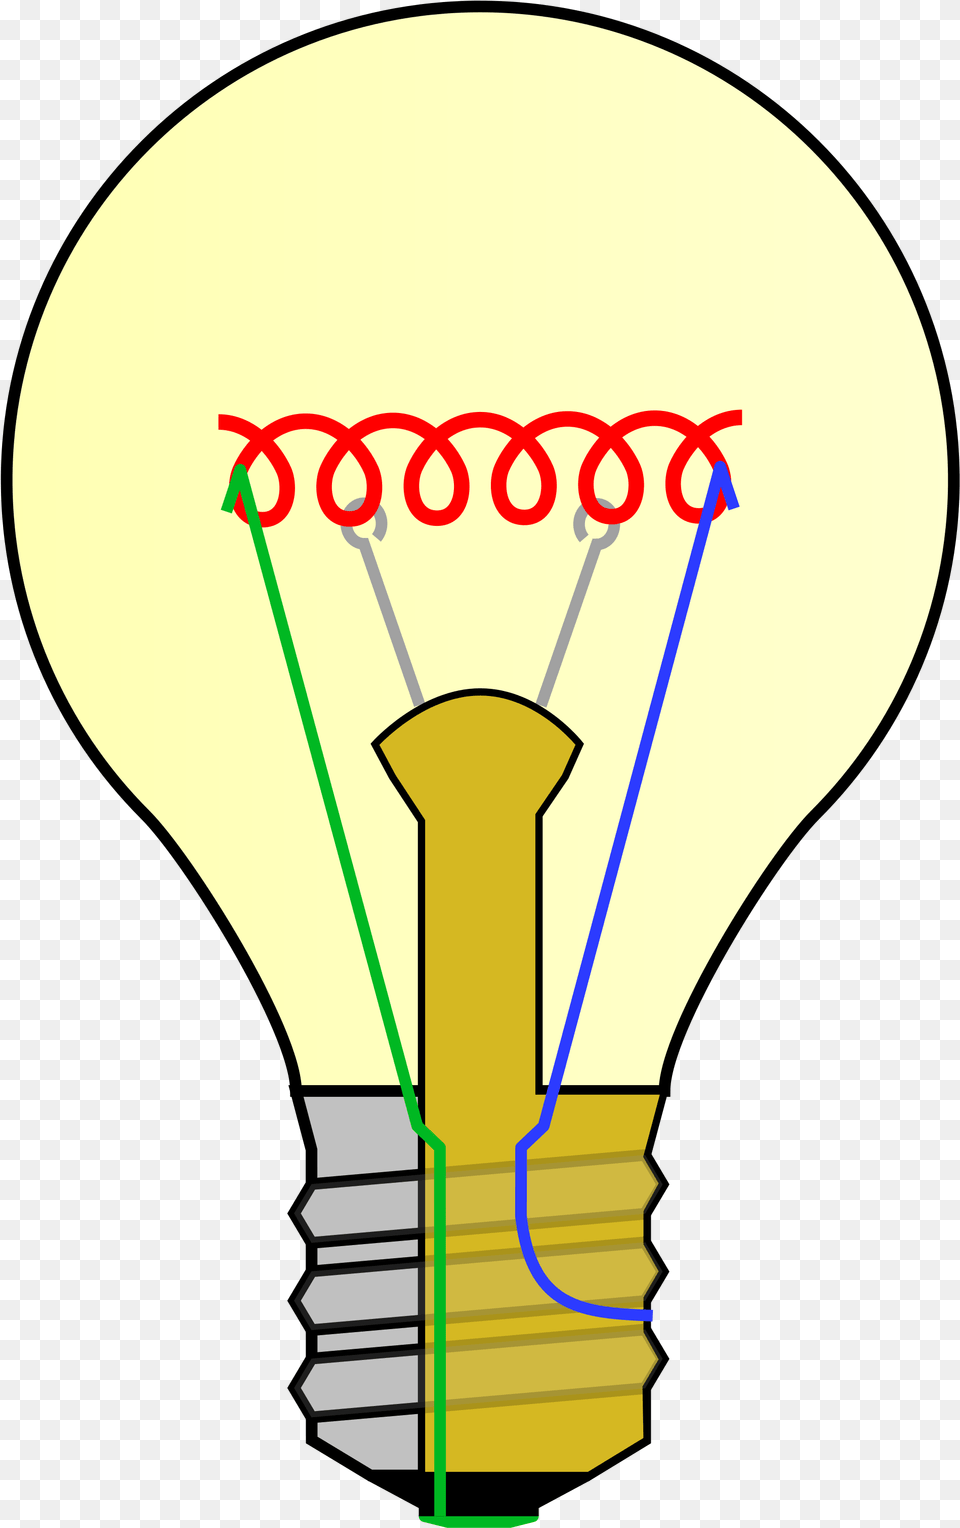 Fileincandescent Light Bulb No Labelssvg Wikimedia Commons Incandescent Light Bulb Diagram, Lightbulb, Dynamite, Weapon Png